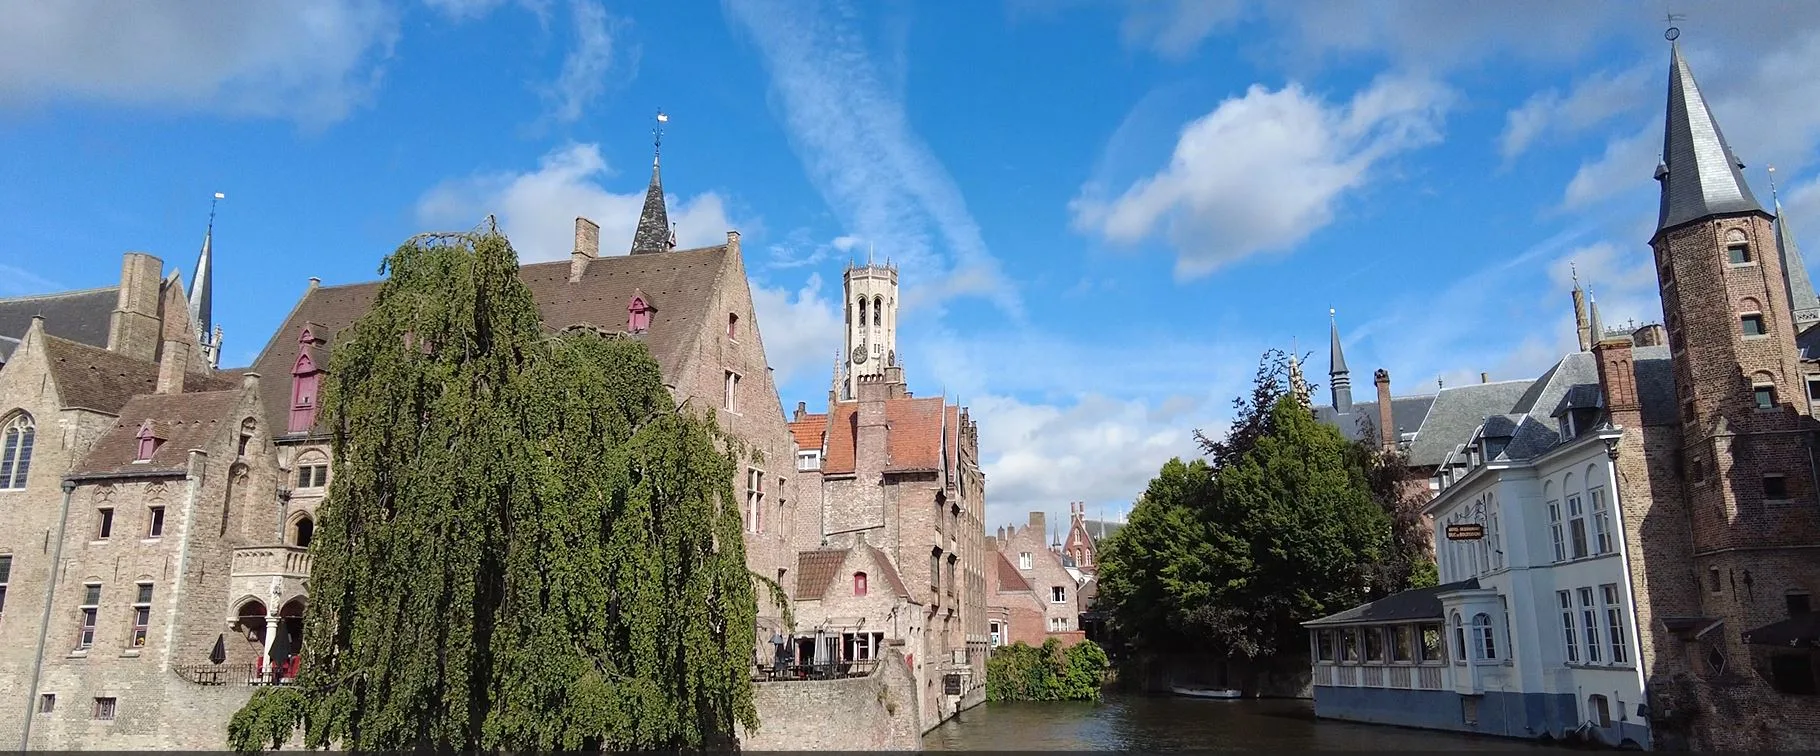 Rozenhoedkaai Bruges